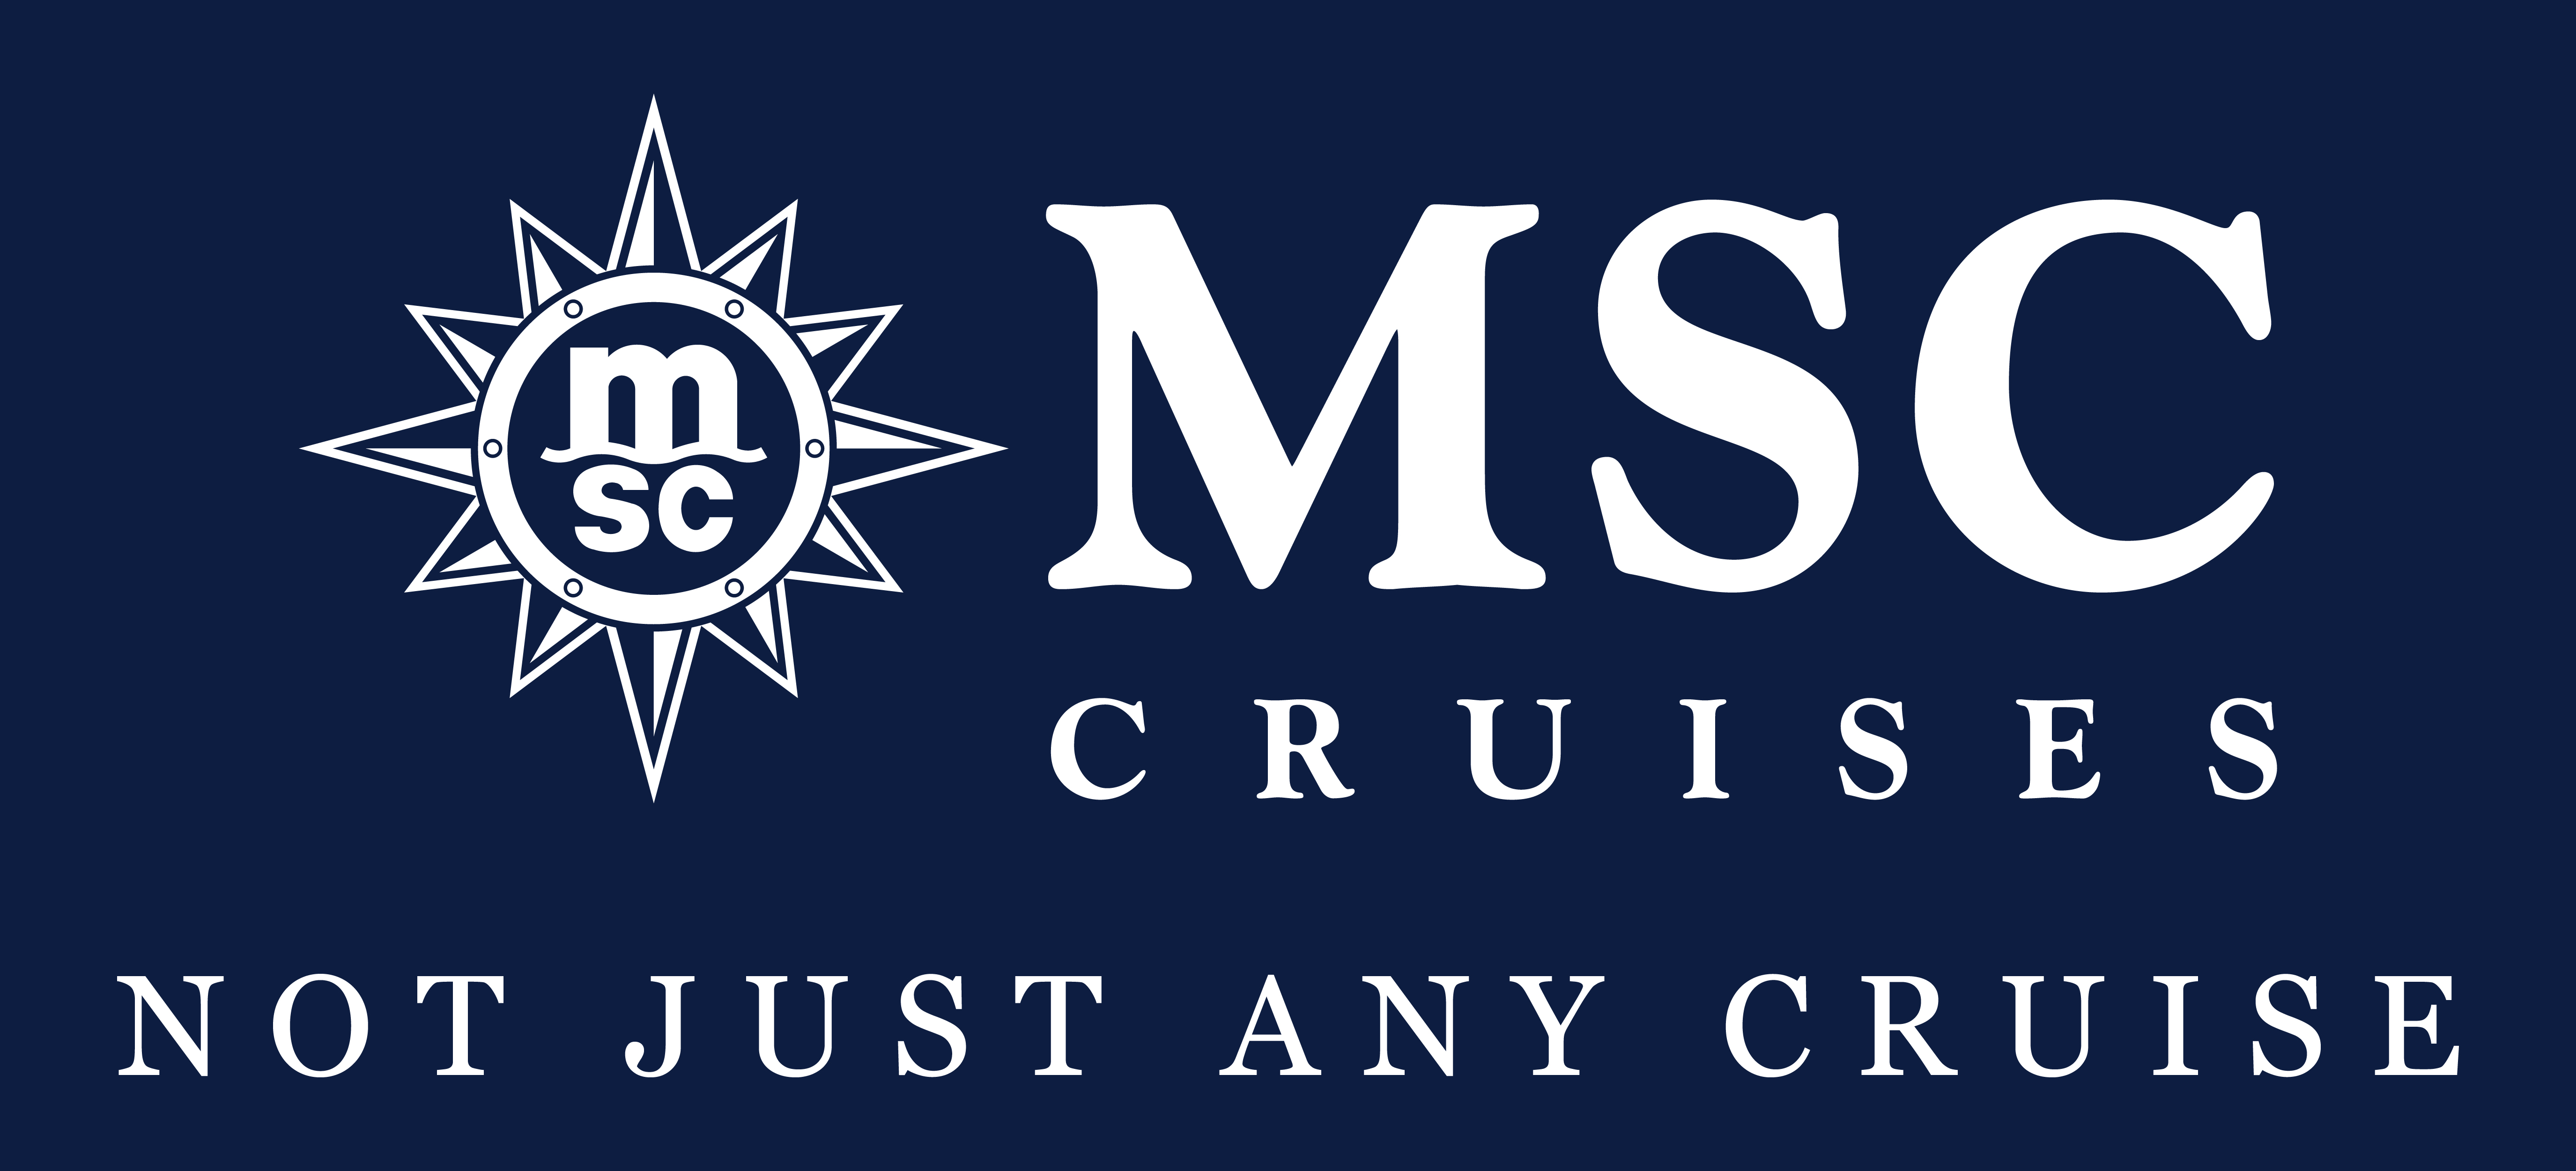 cruise company mission